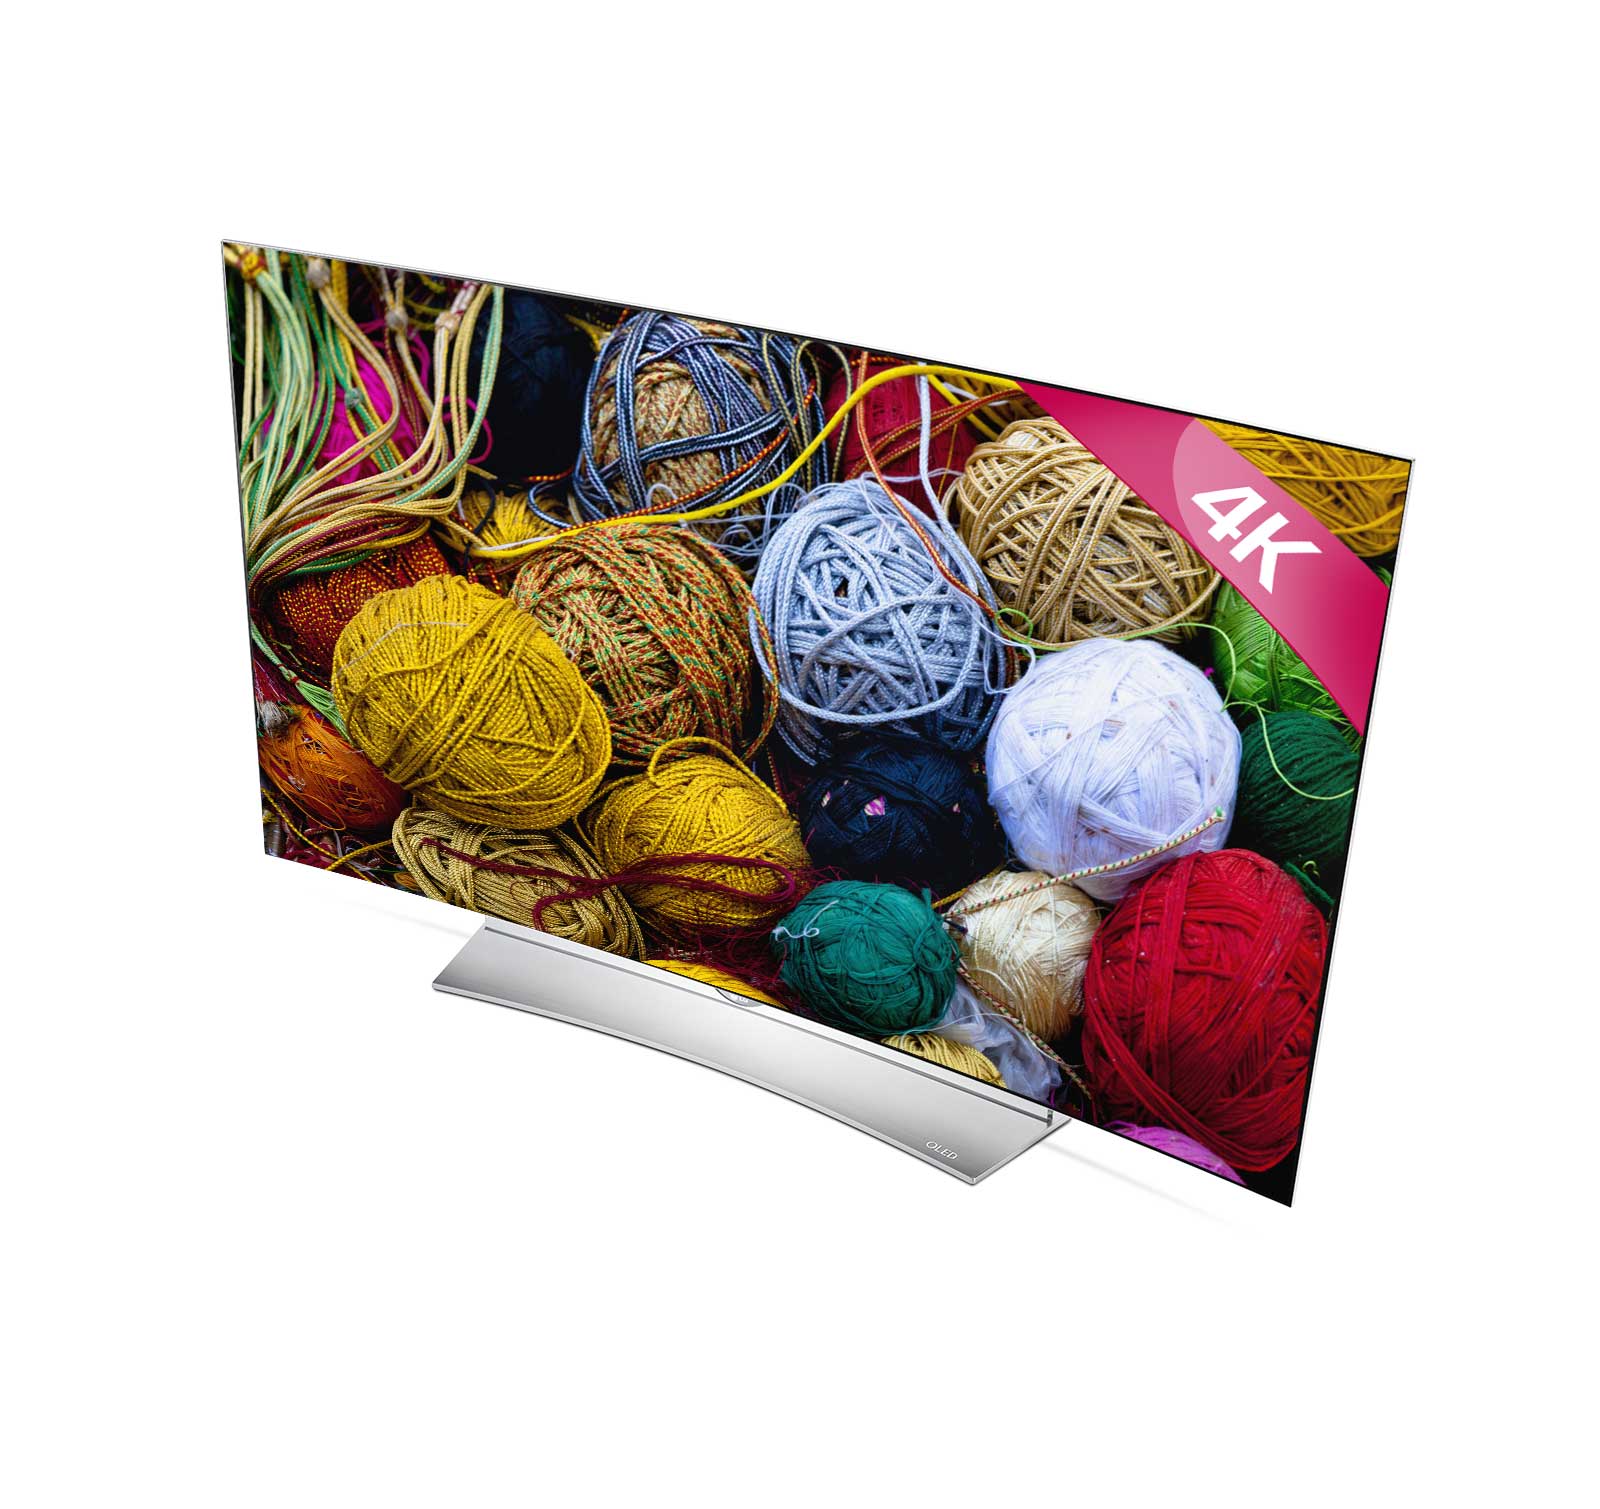 LG 55" Class 4K UHDTV (2160p) Smart OLED TV (55EG9600) - image 5 of 7